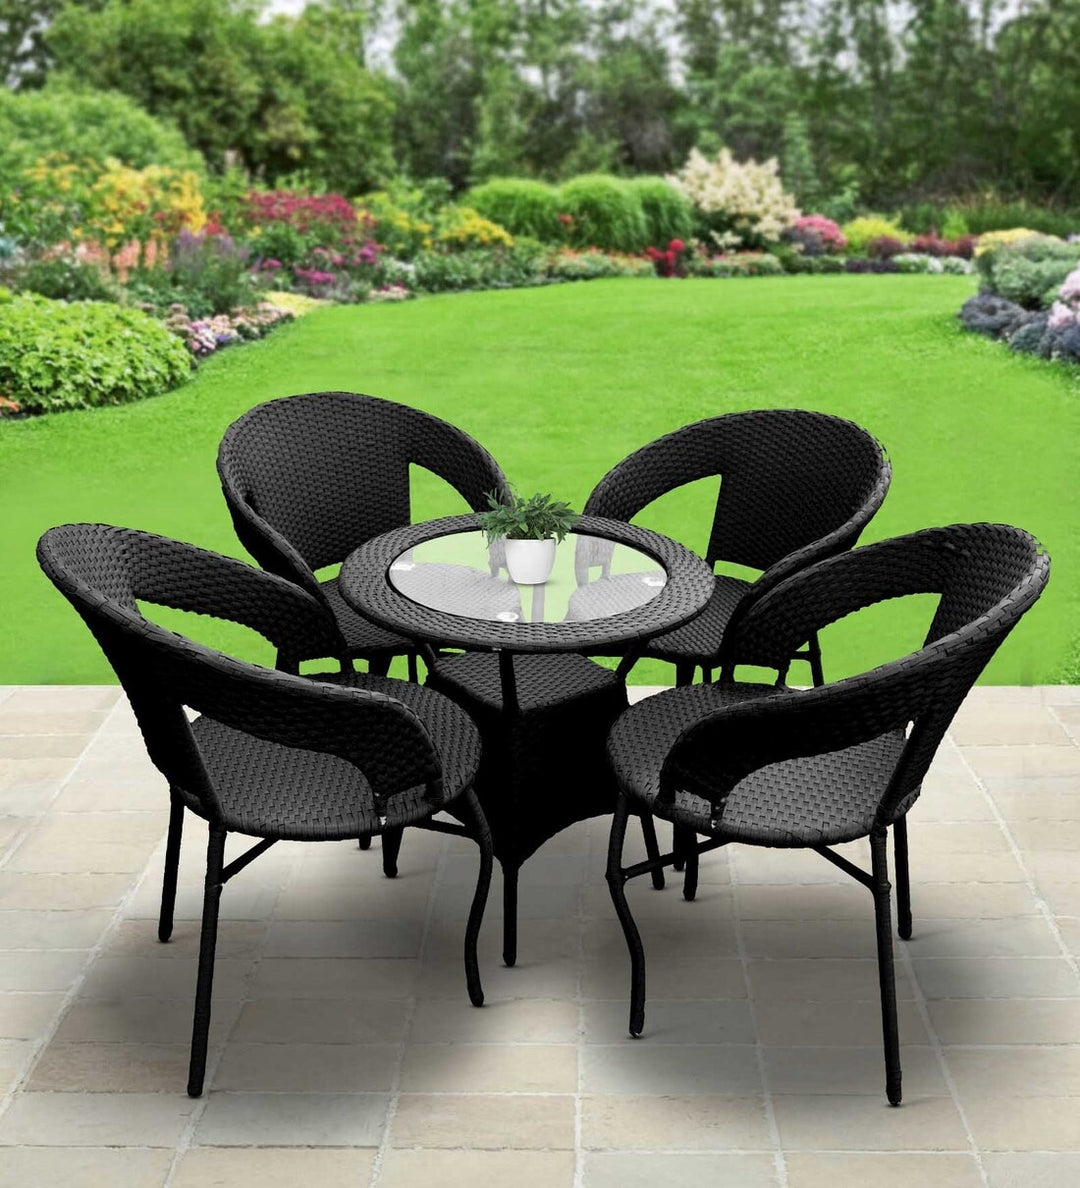 Dreamline Outdoor Furniture Garden Patio Seating Set 1+4 4 Chairs